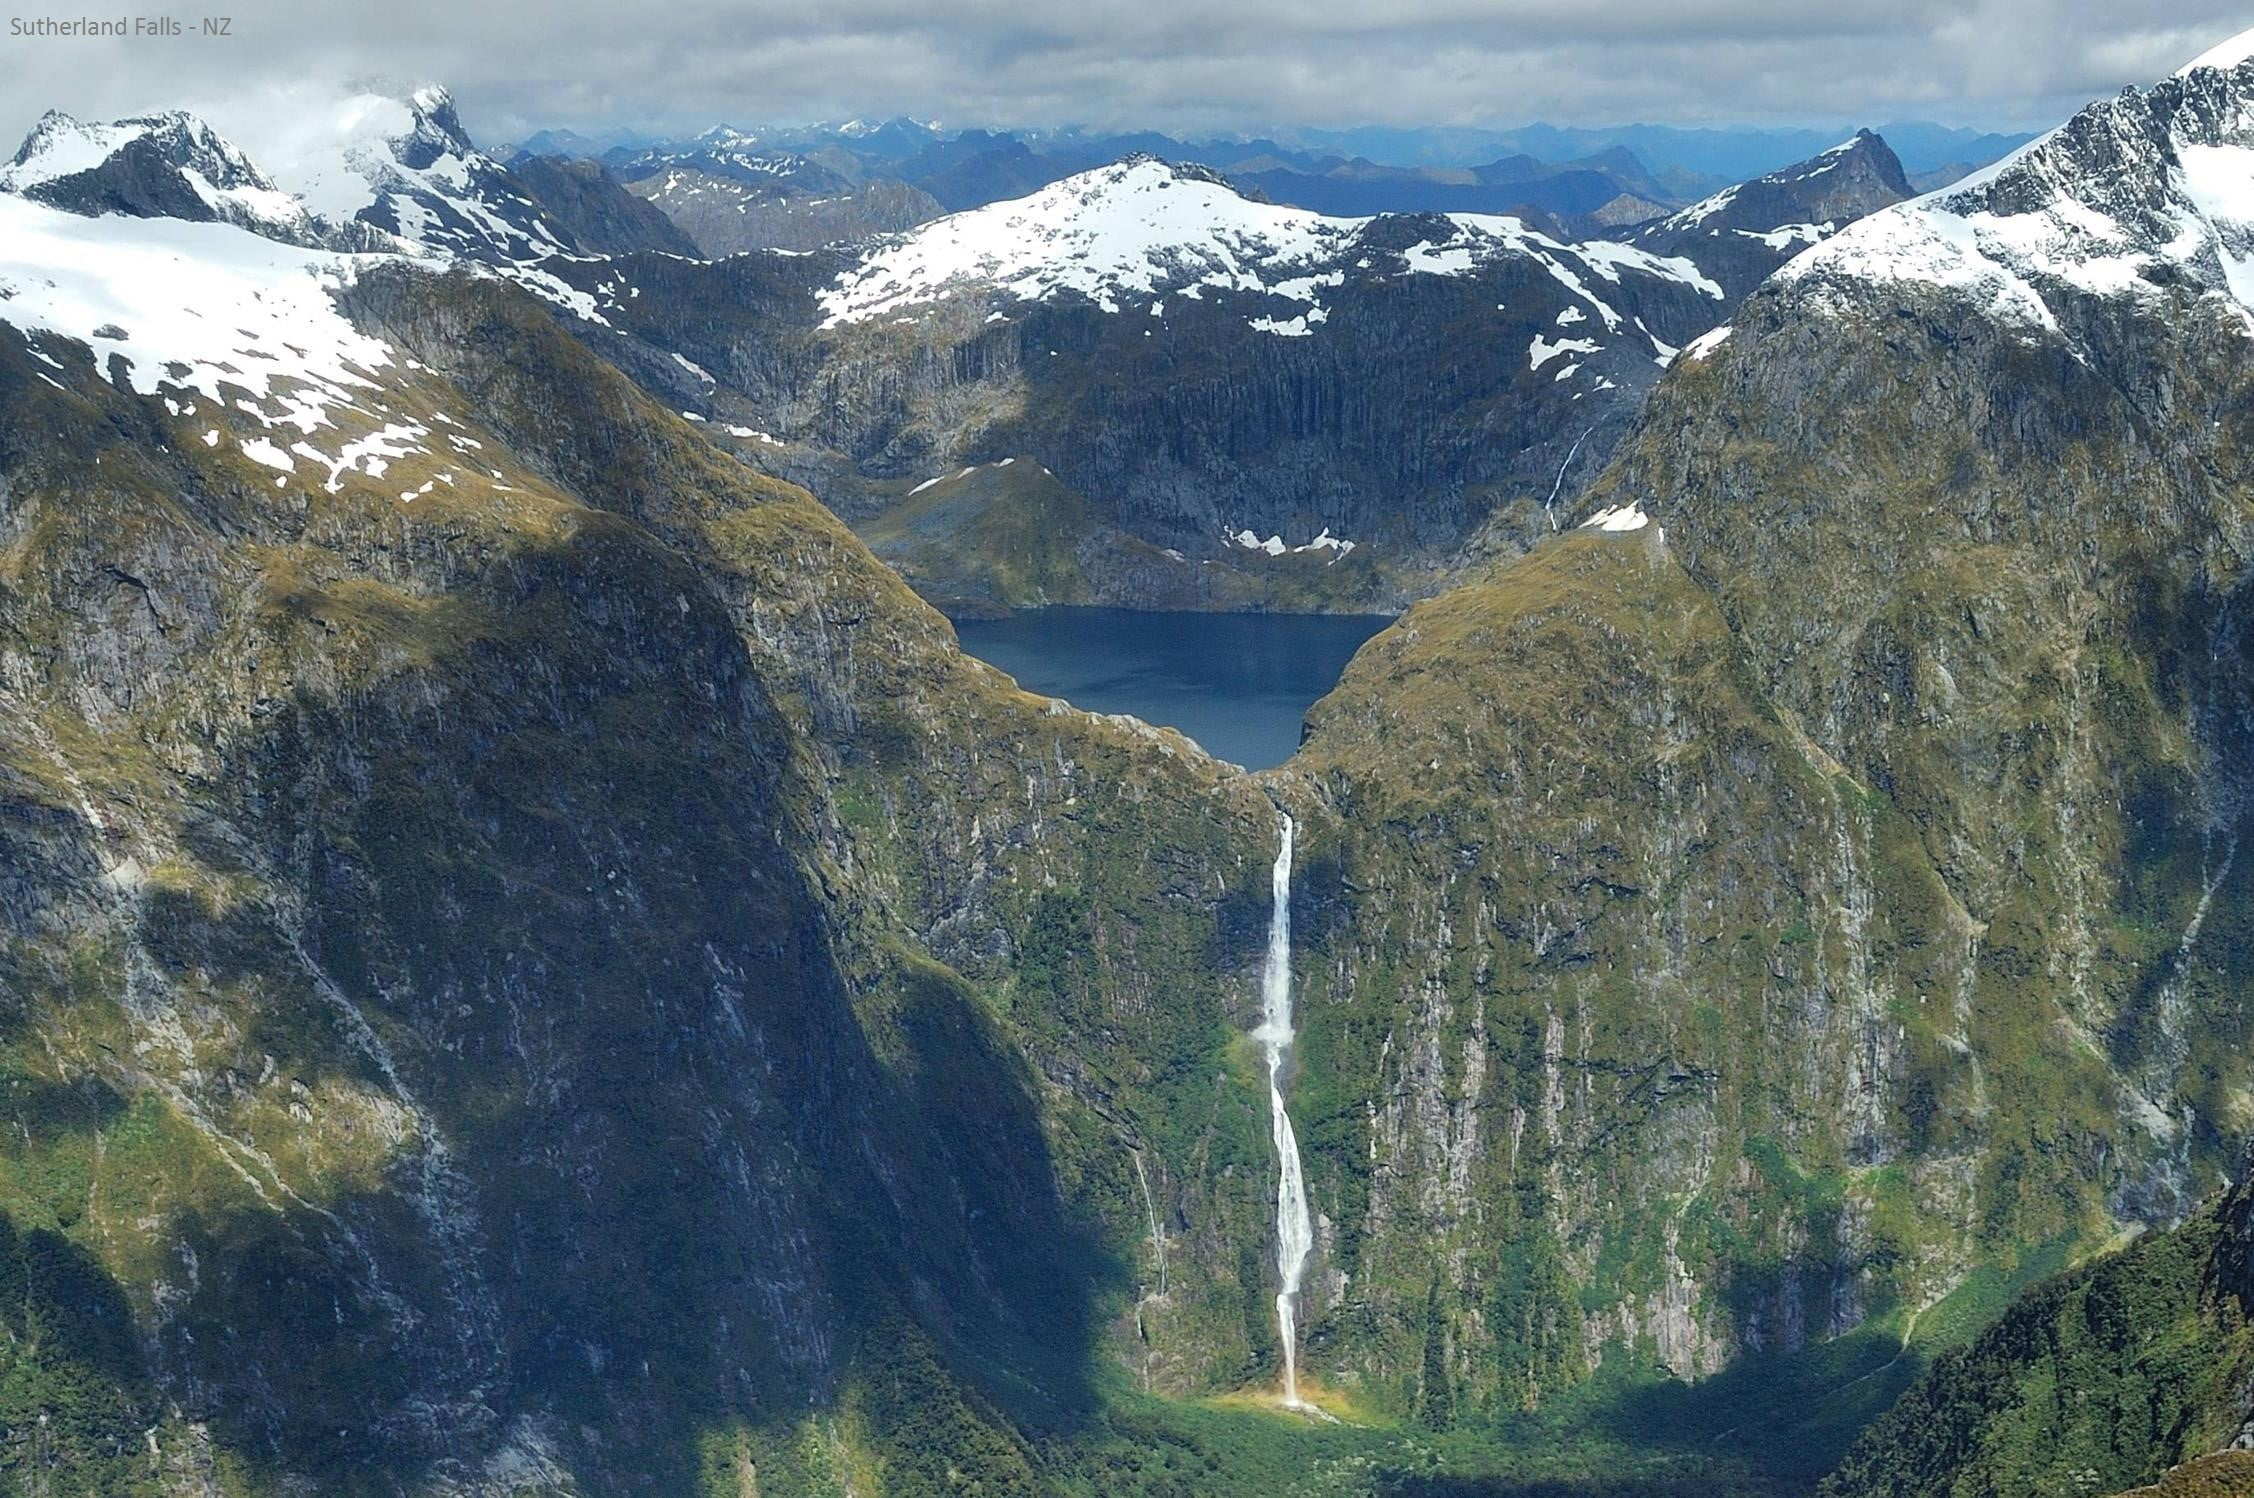 Angel Falls , Venezuela, Sutherland Falls, New Zealand, - Milford Track Sutherland Falls , HD Wallpaper & Backgrounds